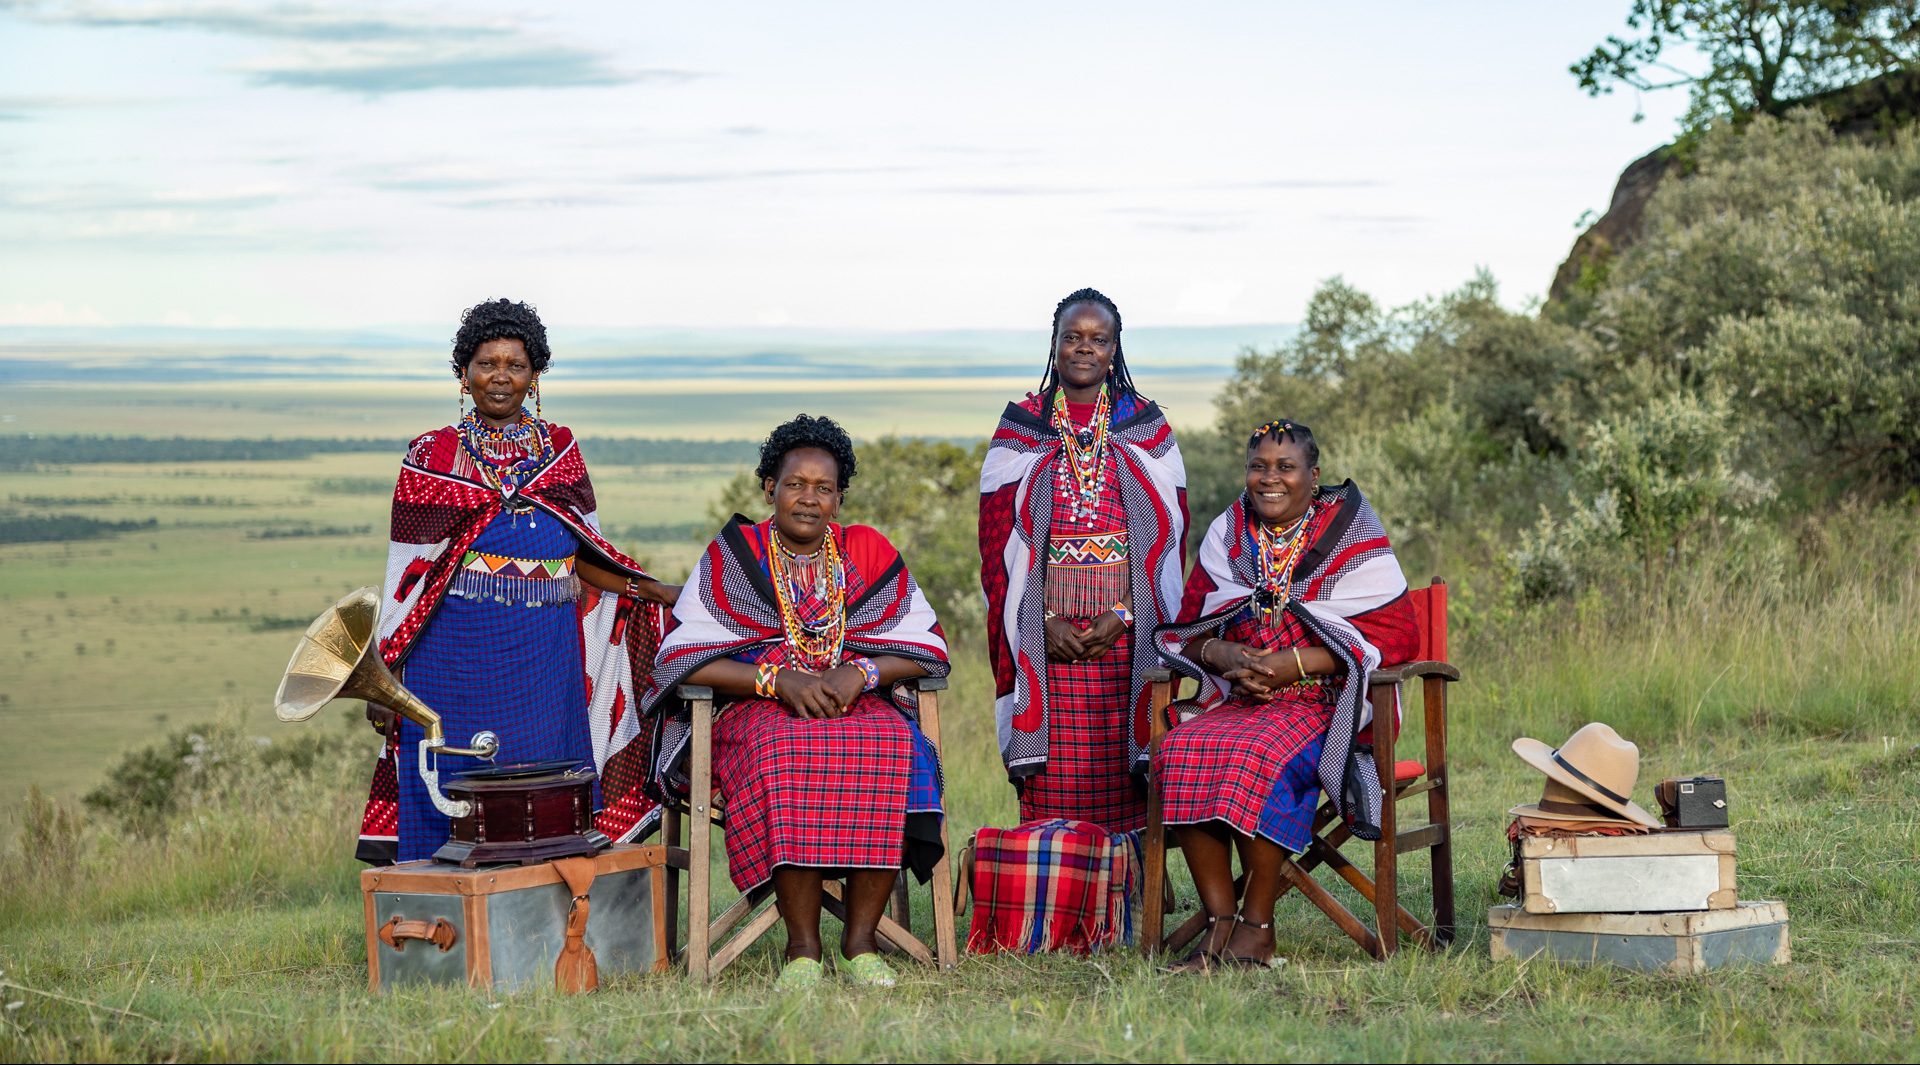 Will you be rocking Maasai looks next fall?